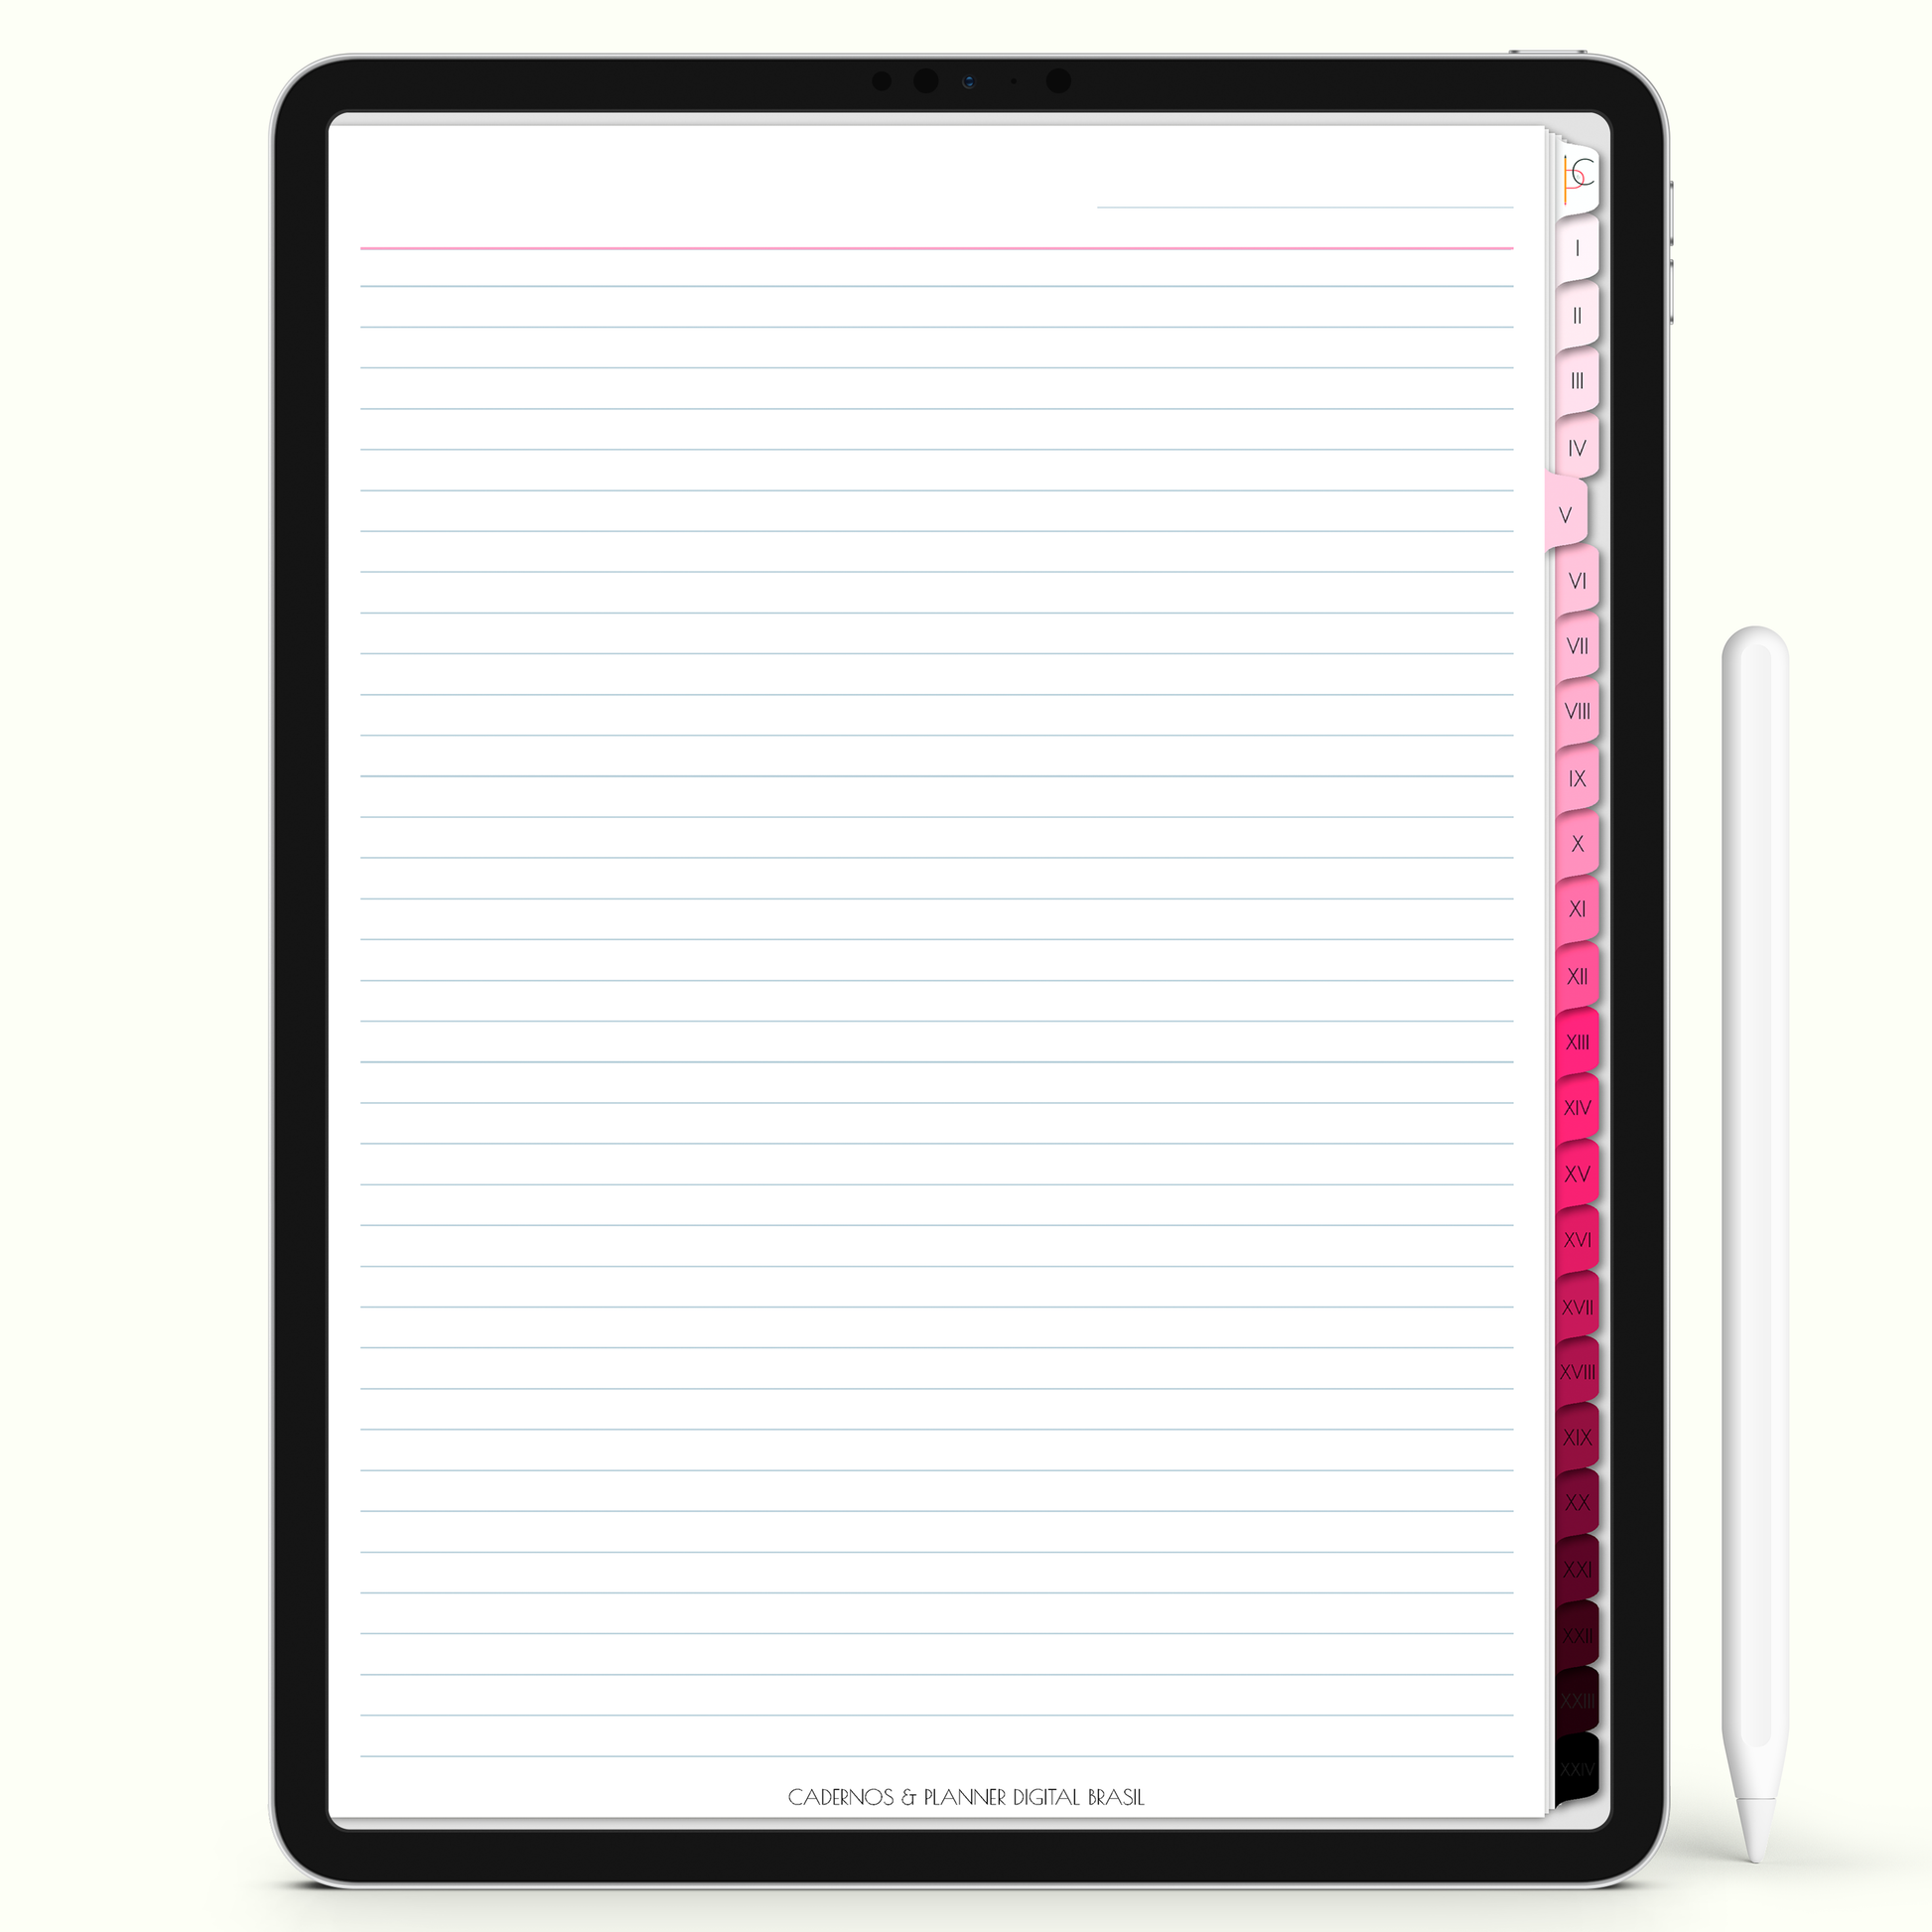 Caderno Digital Blush 24 Matérias - Páginas Pautadas do Caderno Digital para iPad e Tablet Android. Cadernos & Planner Digital Brasil